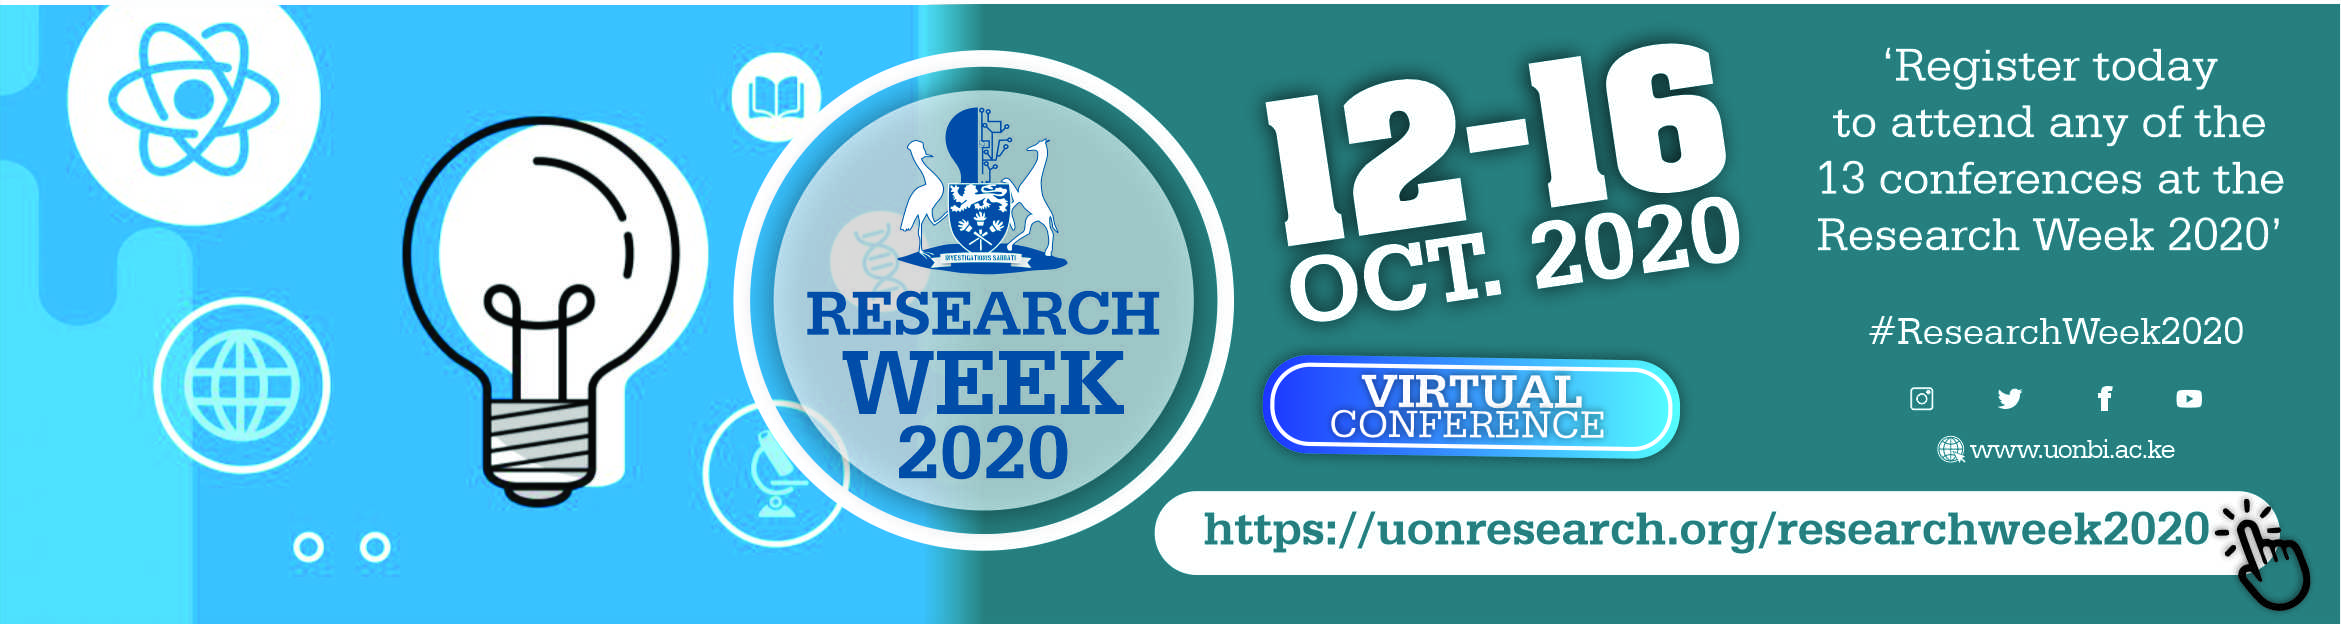 Research week 2020